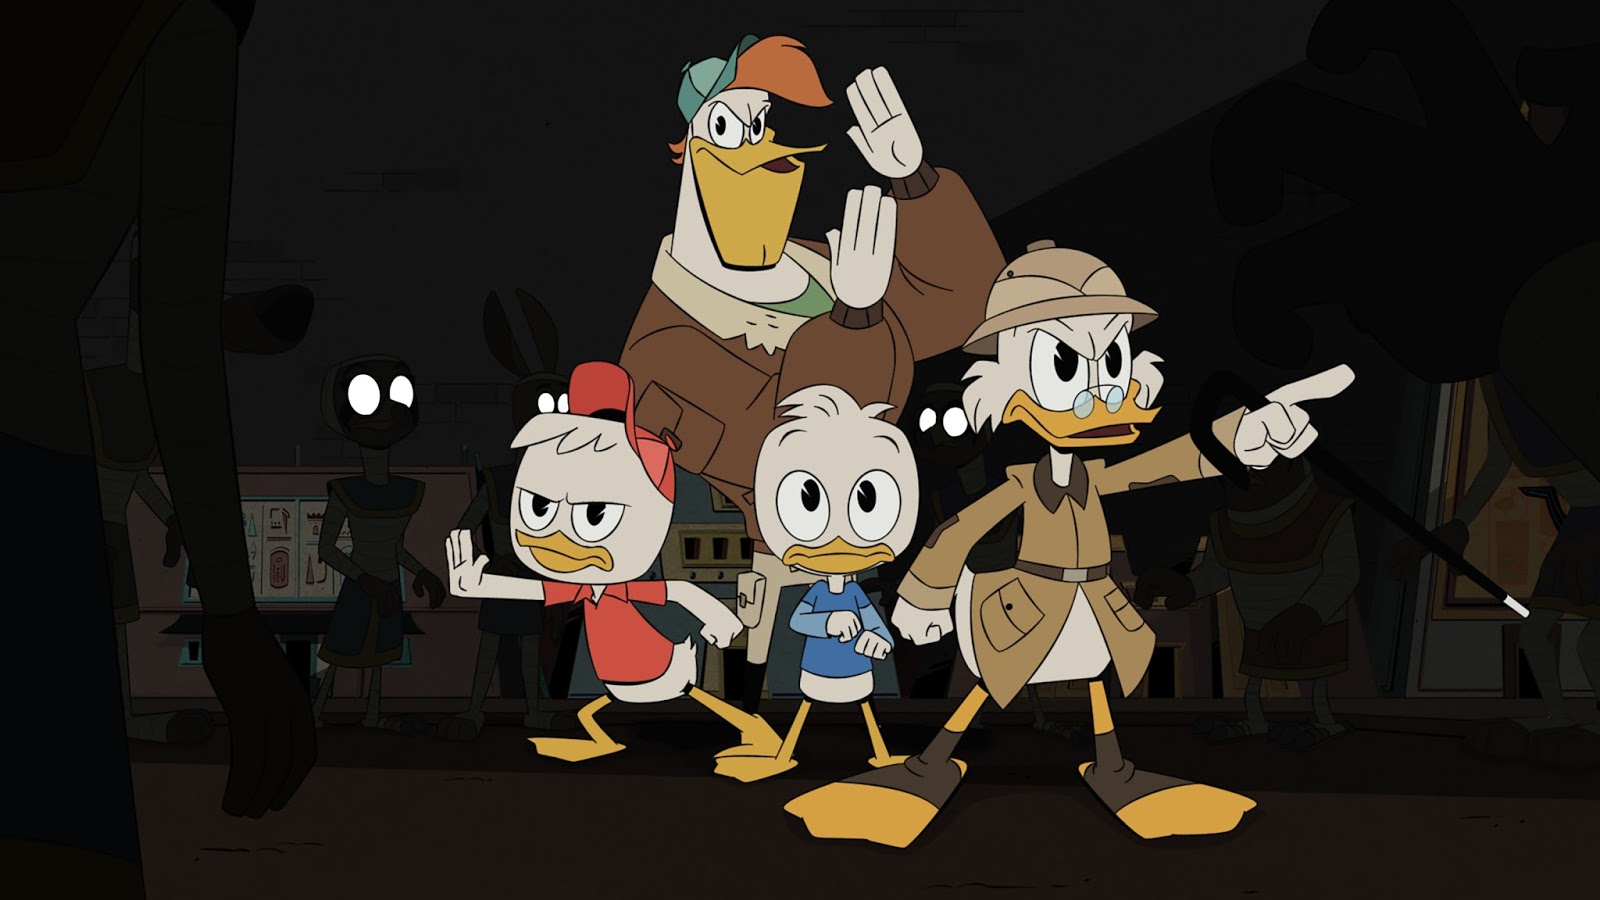 Ducktales Tv Show On Disney Xd Renewed For Season Three - Ducktales 2017  Season 3 - 1600x900 Wallpaper 